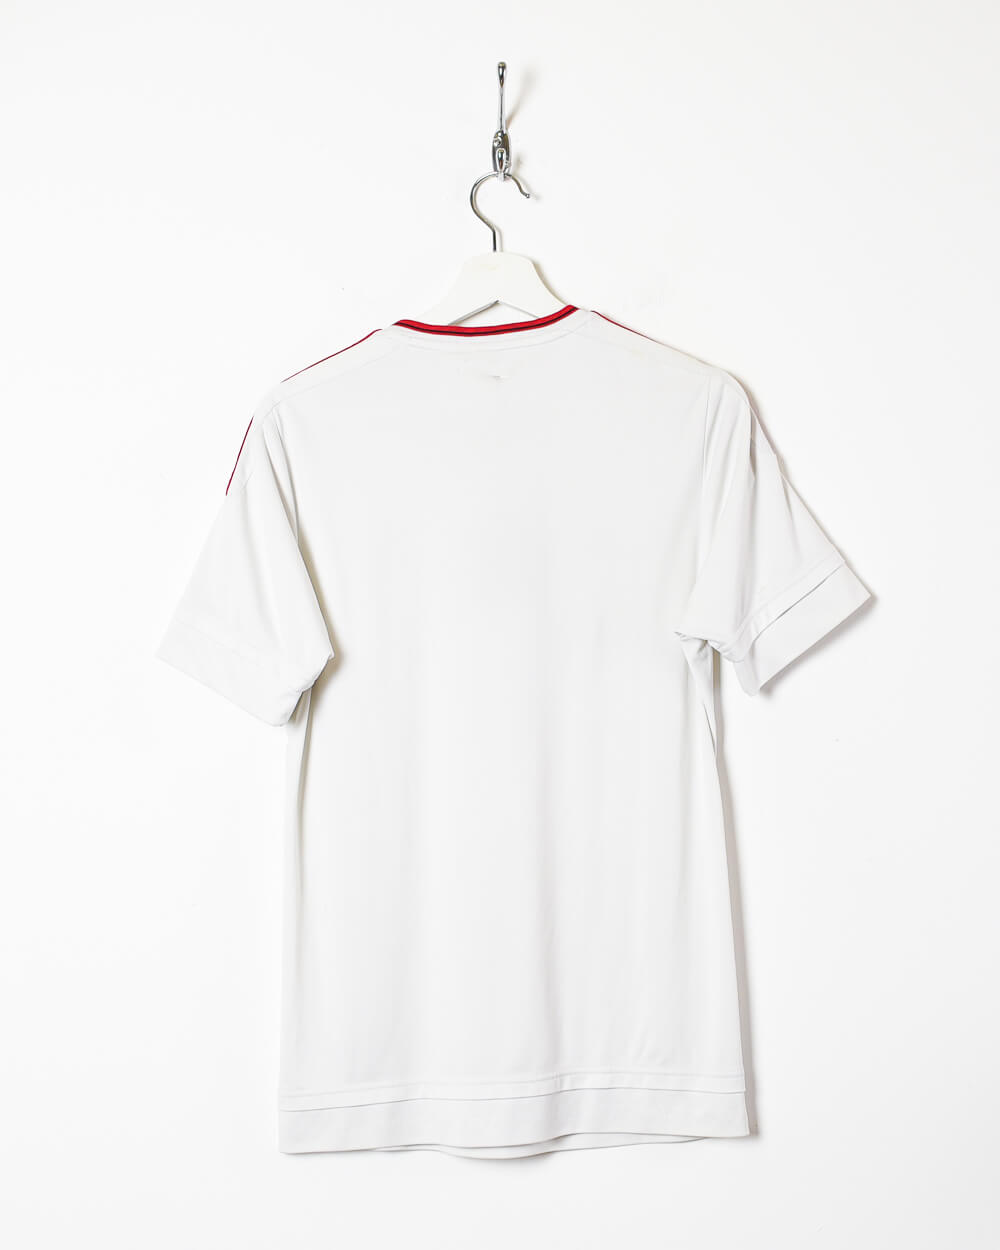 White Adidas 2015/16 Manchester United Away Shirt - Small